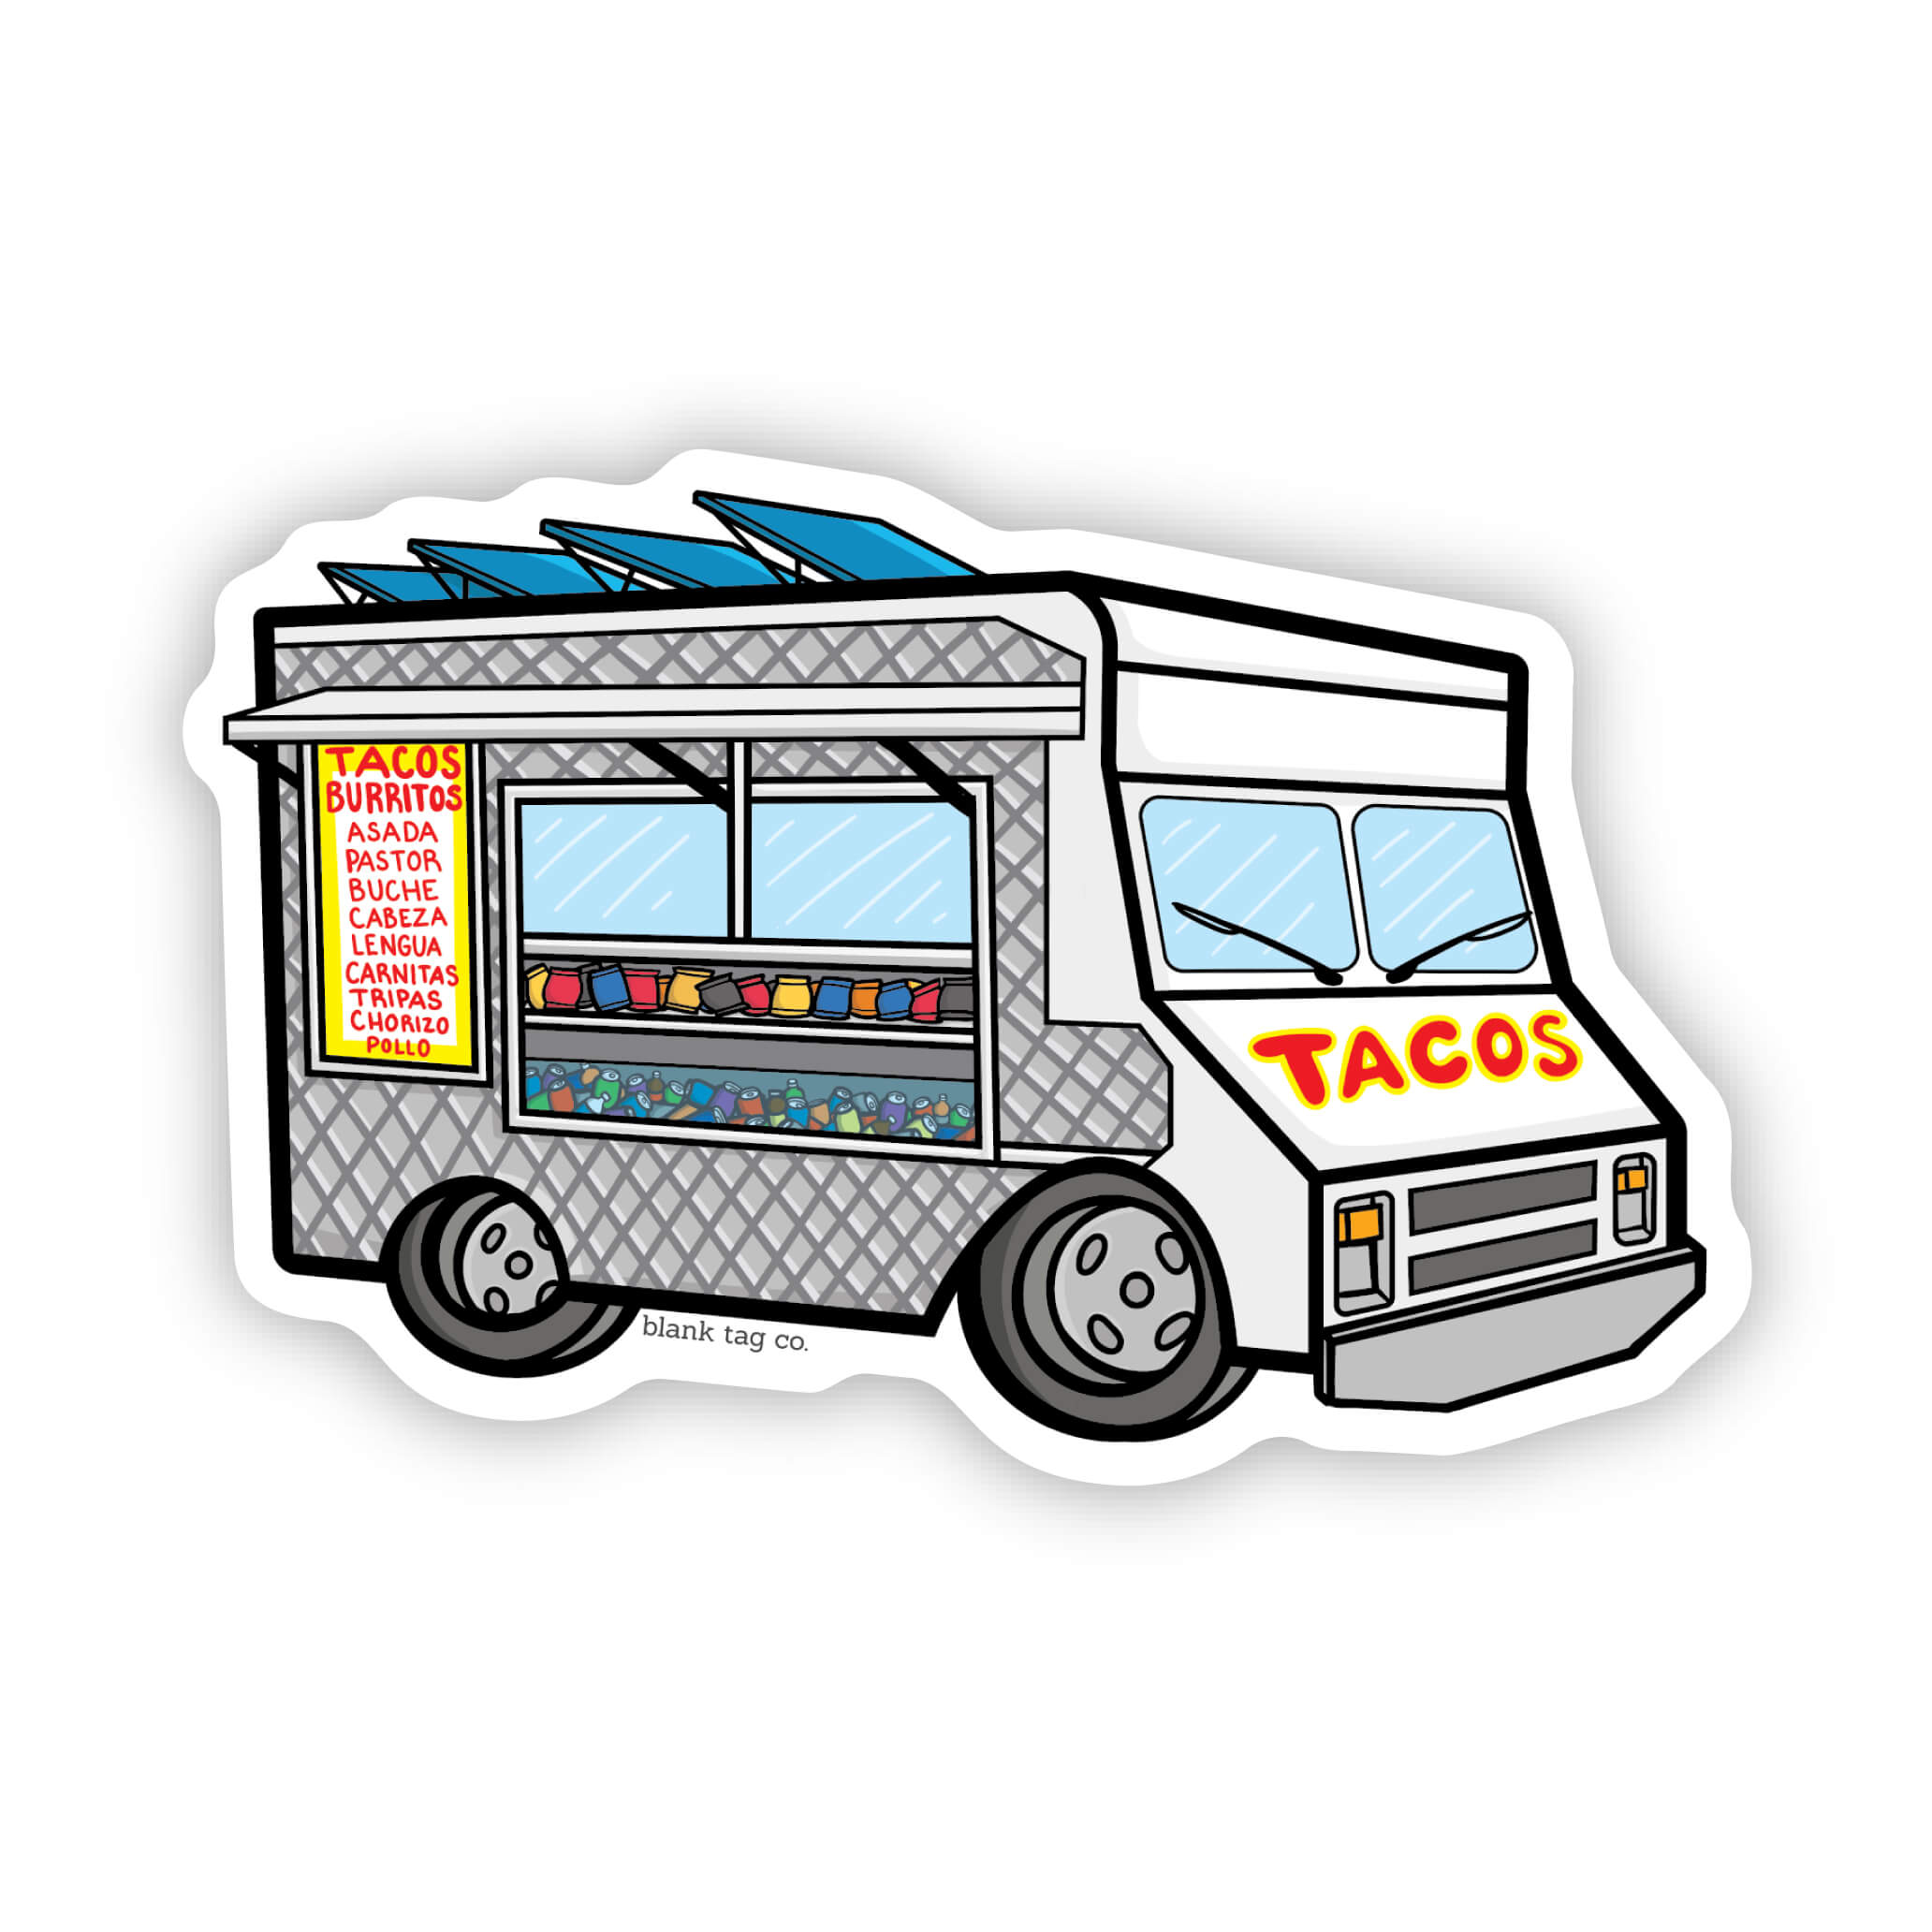 The Taco Truck Sticker